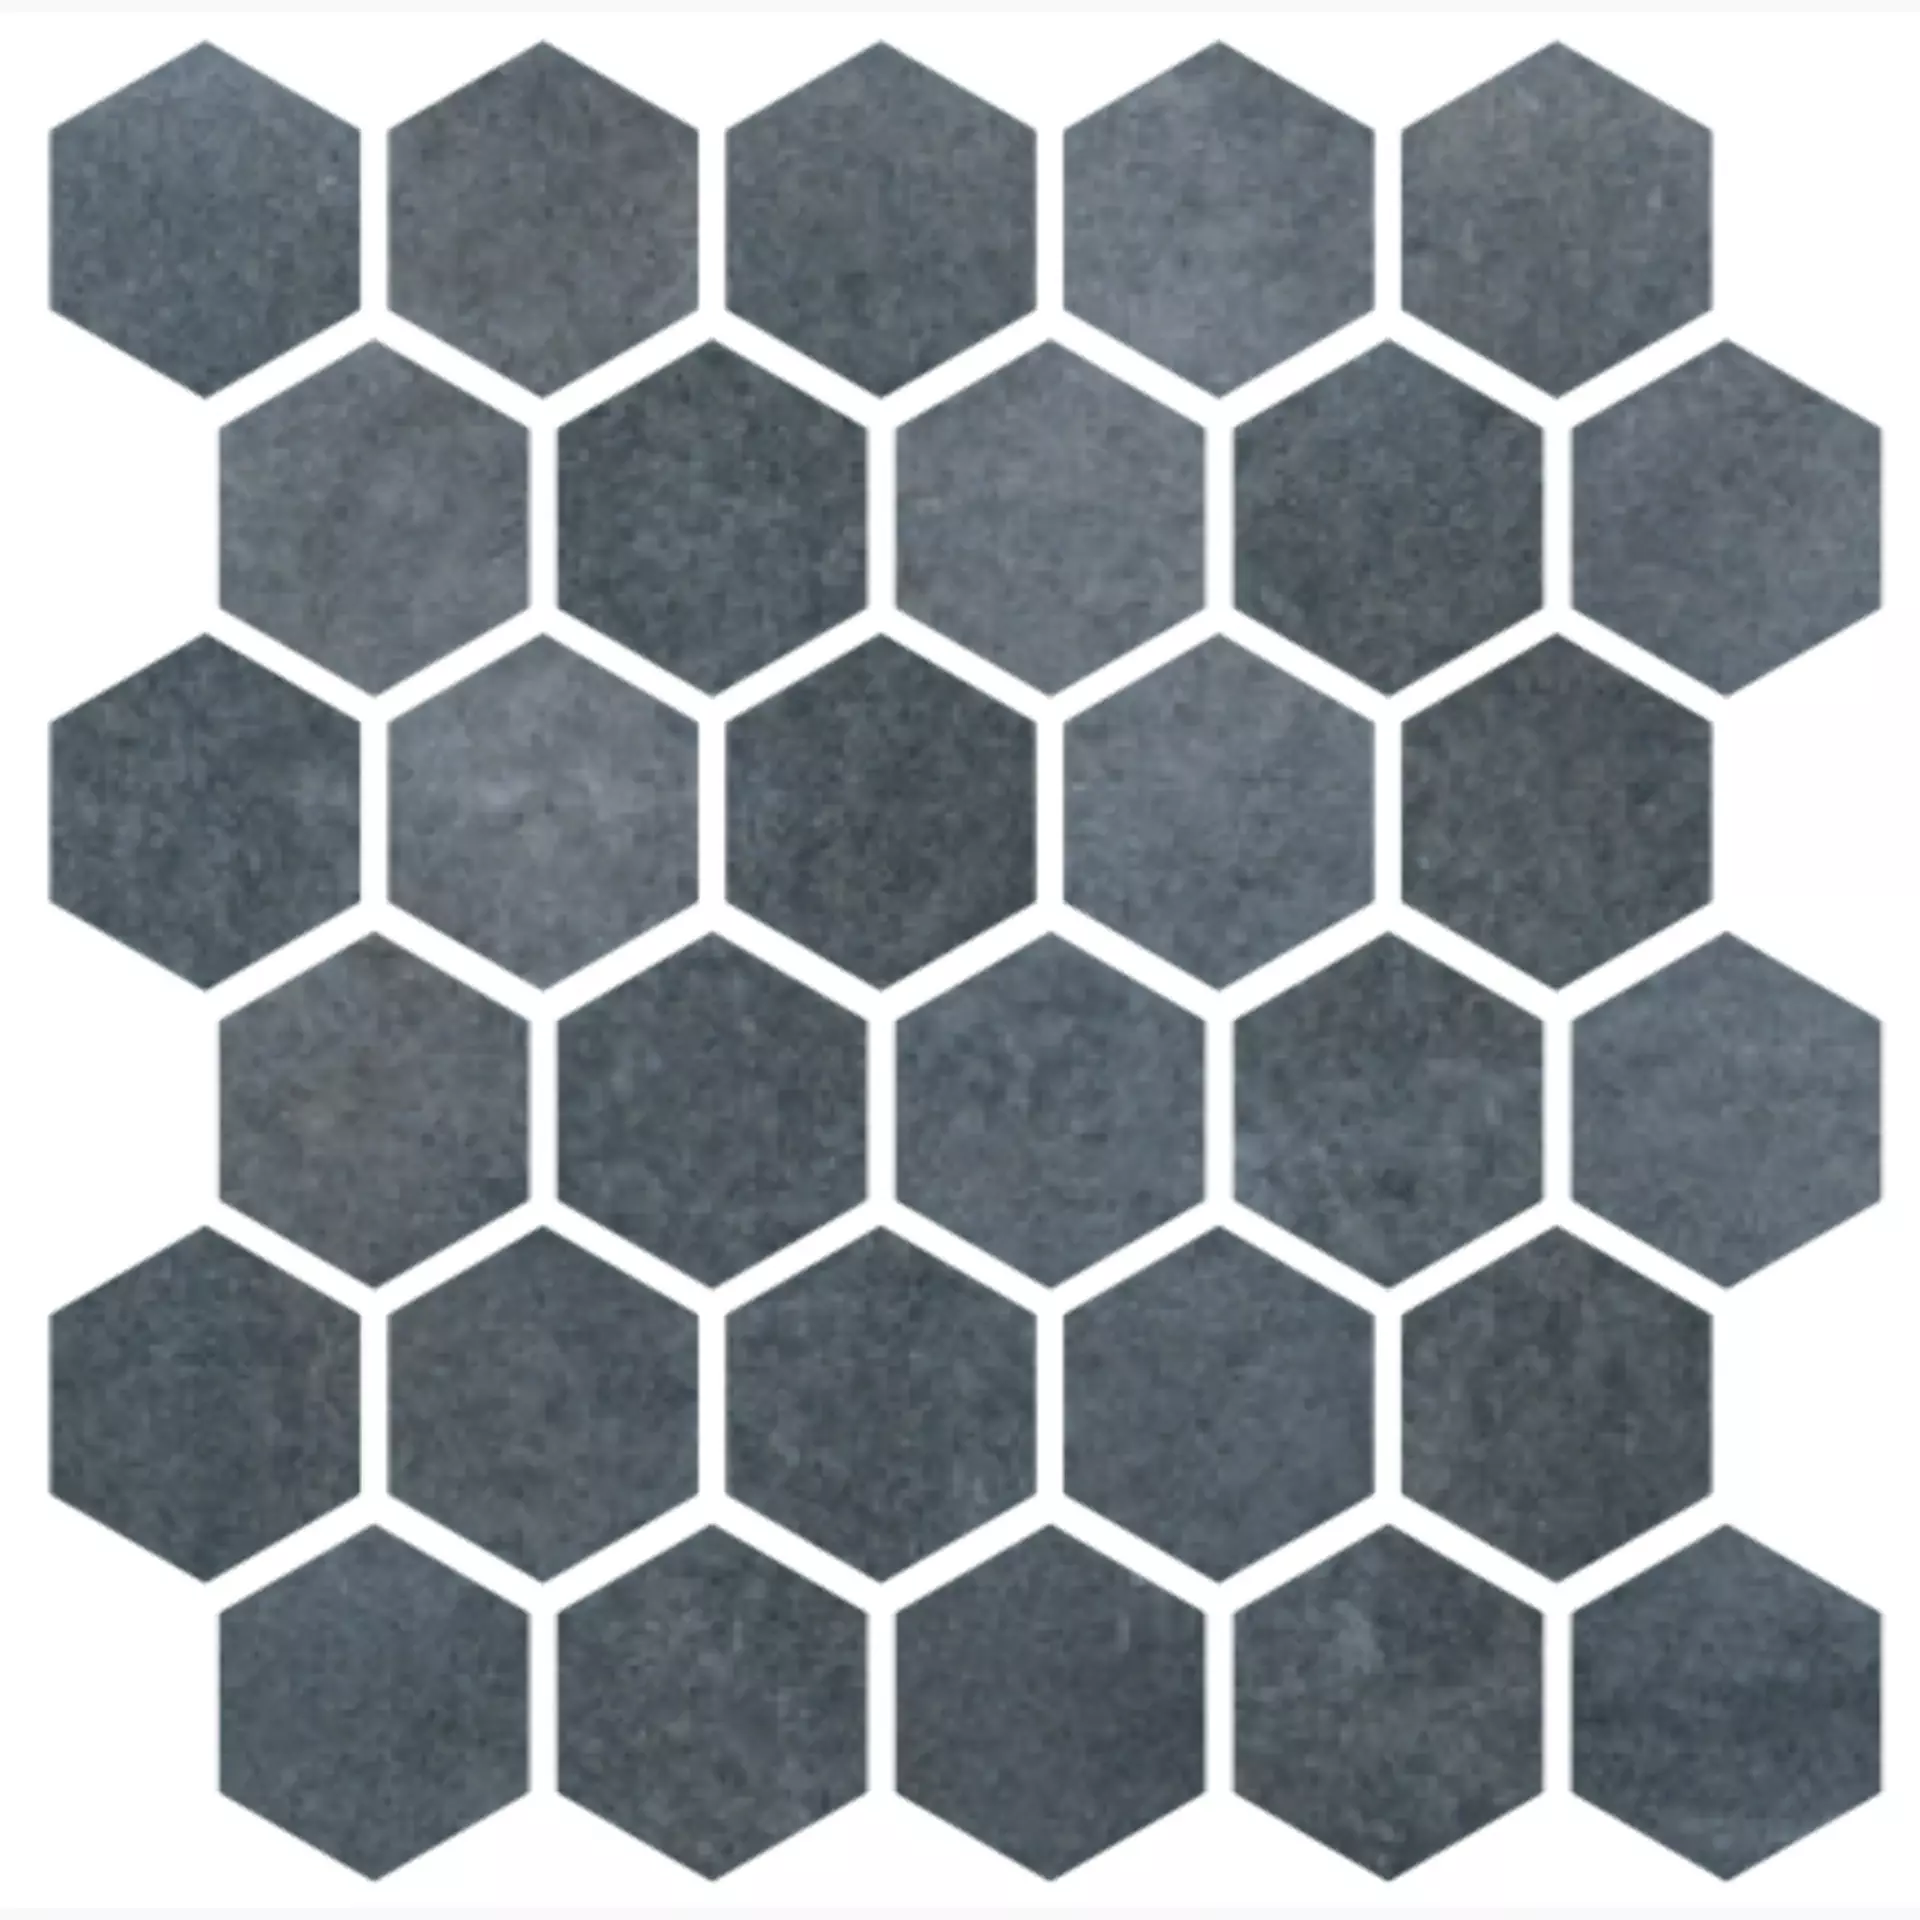 CIR Materia Prima Navy Sea Naturale Mosaik Hexagon 1069915 27x27cm